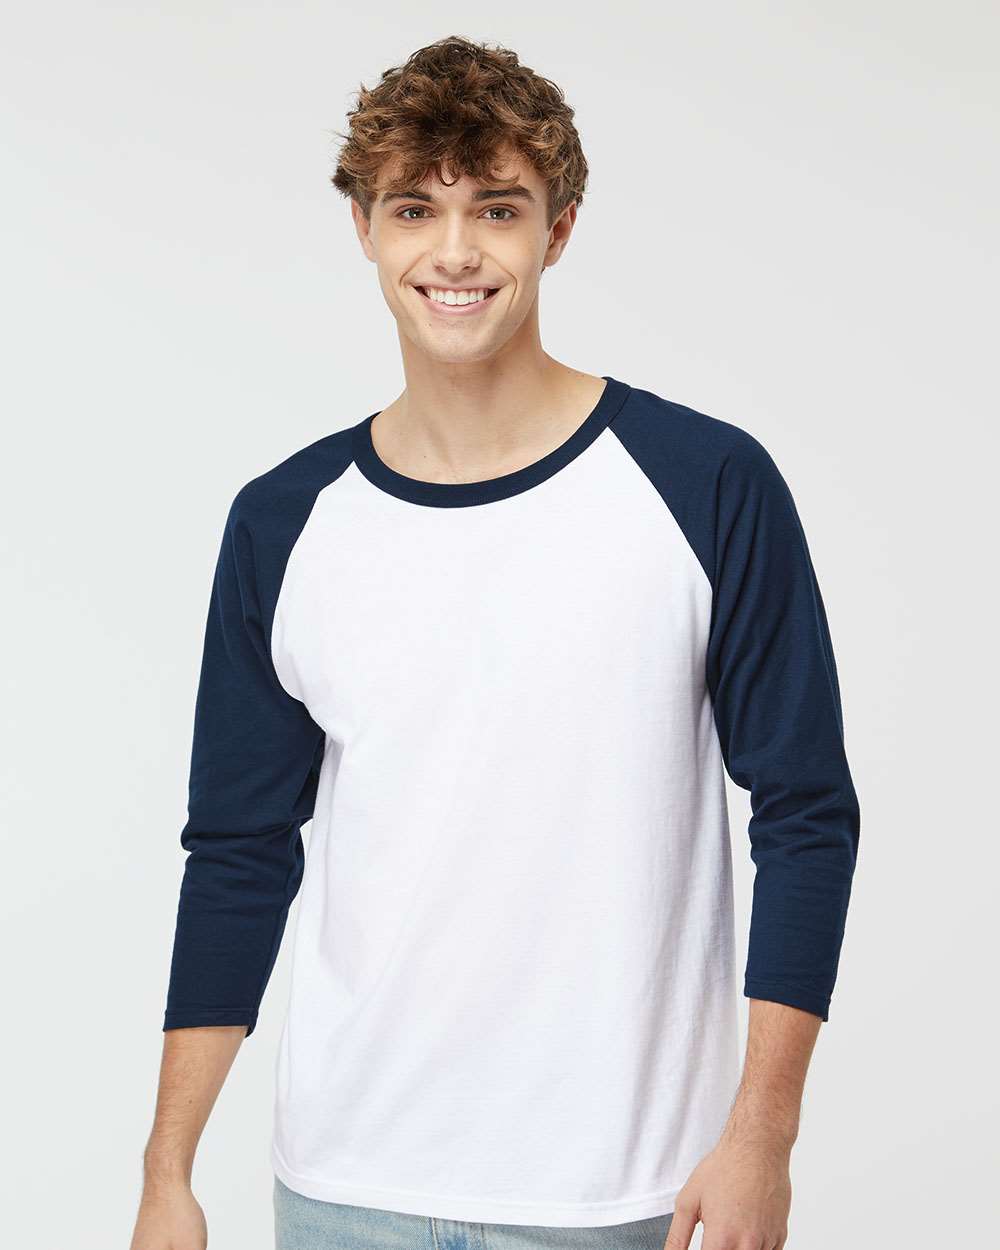 M&O Raglan Three-Quarter Sleeve Baseball T-Shirt 5540 #colormdl_White/ Navy